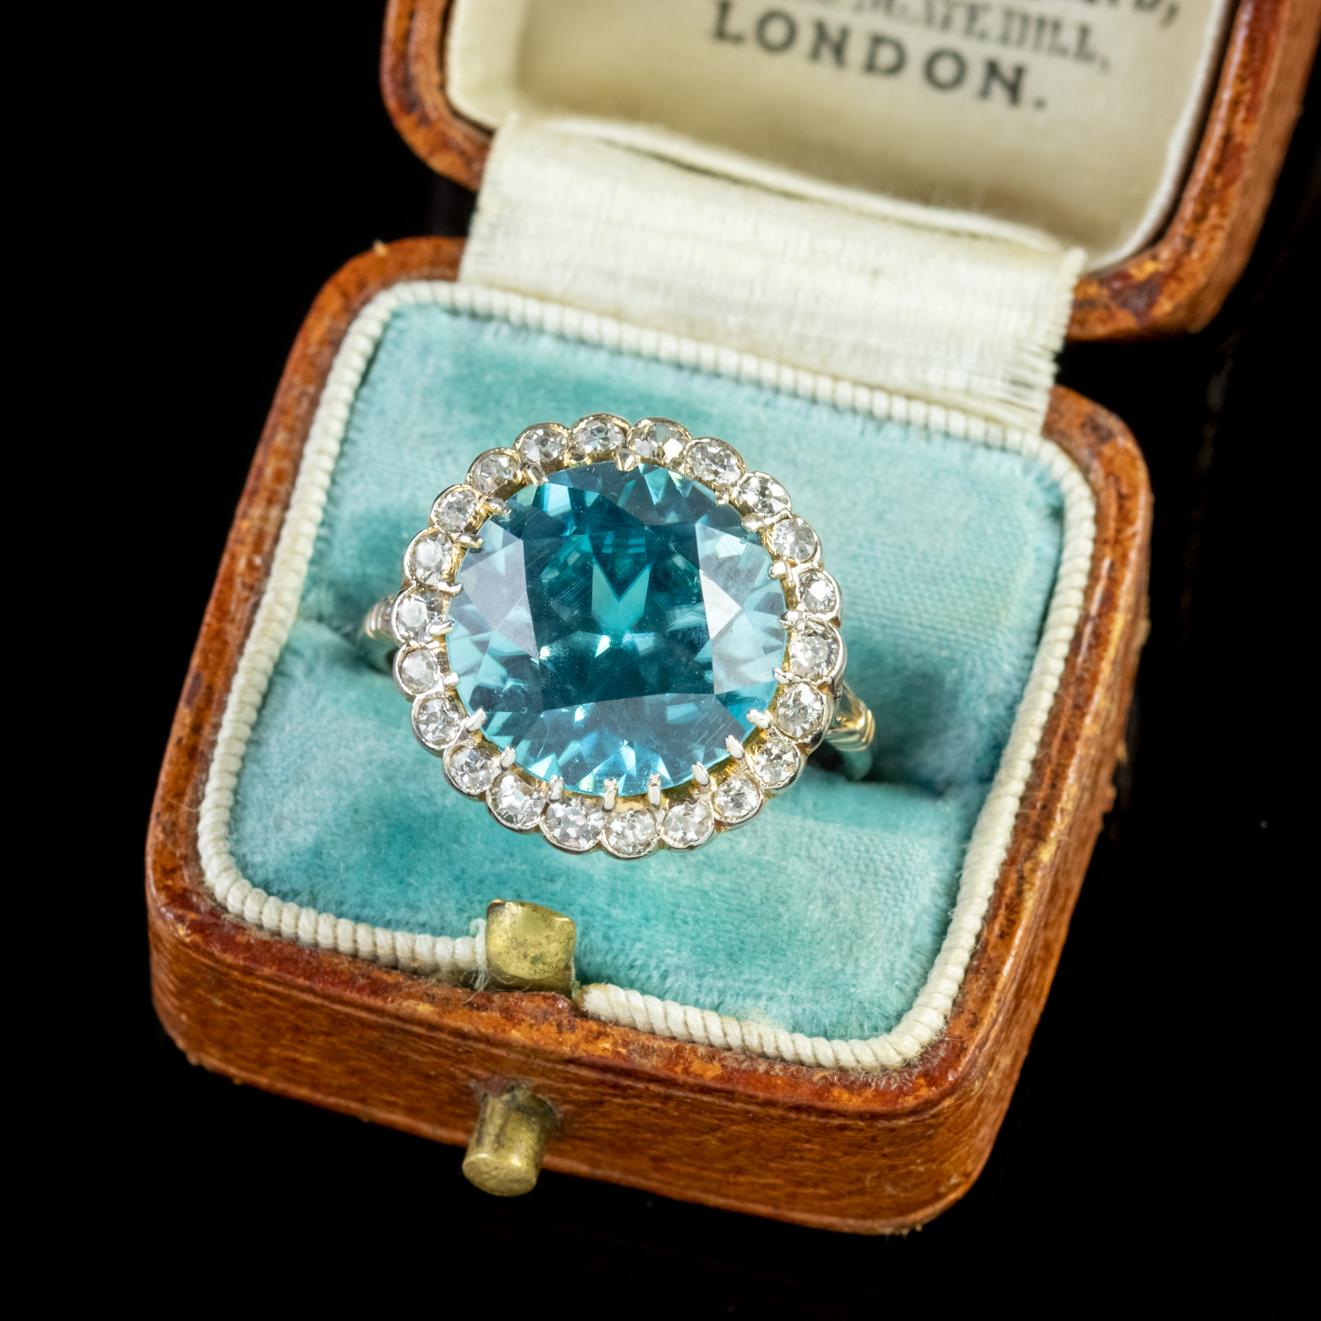 Antique Edwardian 8 Carat Blue Zircon Cluster Ring, circa 1905 For Sale 2